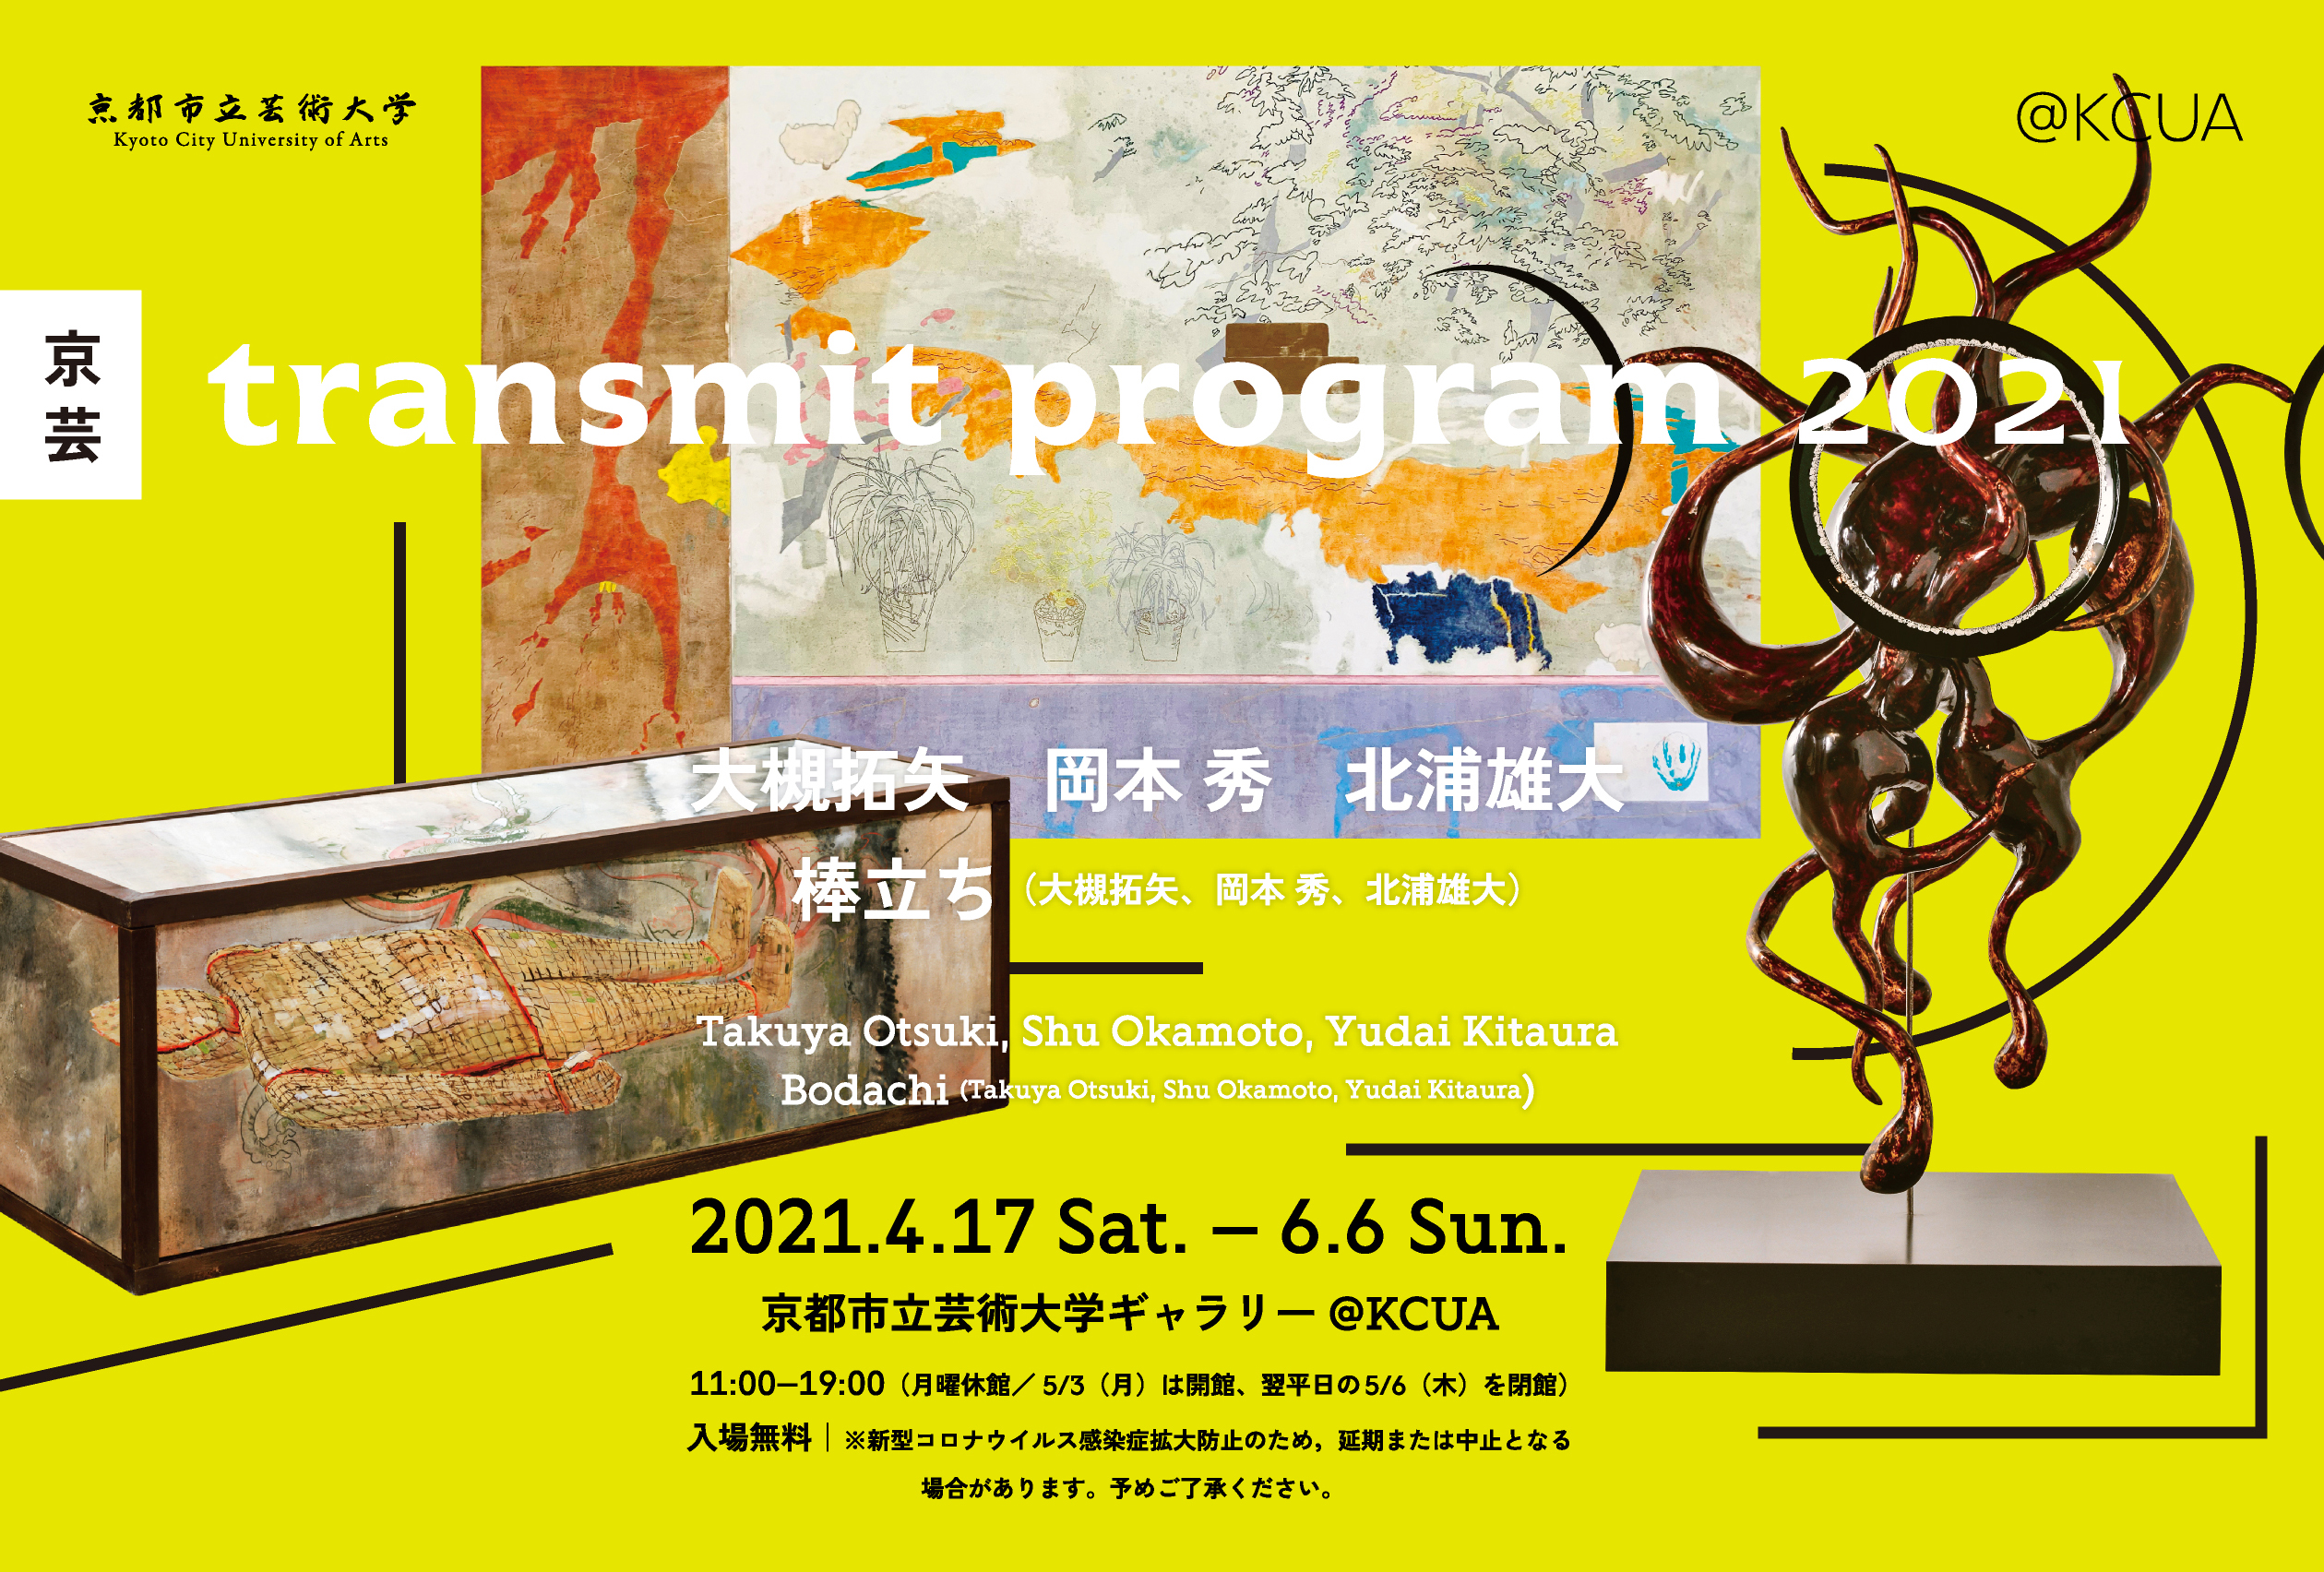 京芸 transmit program 2021 | 京都市立芸術大学ギャラリー@KCUA 